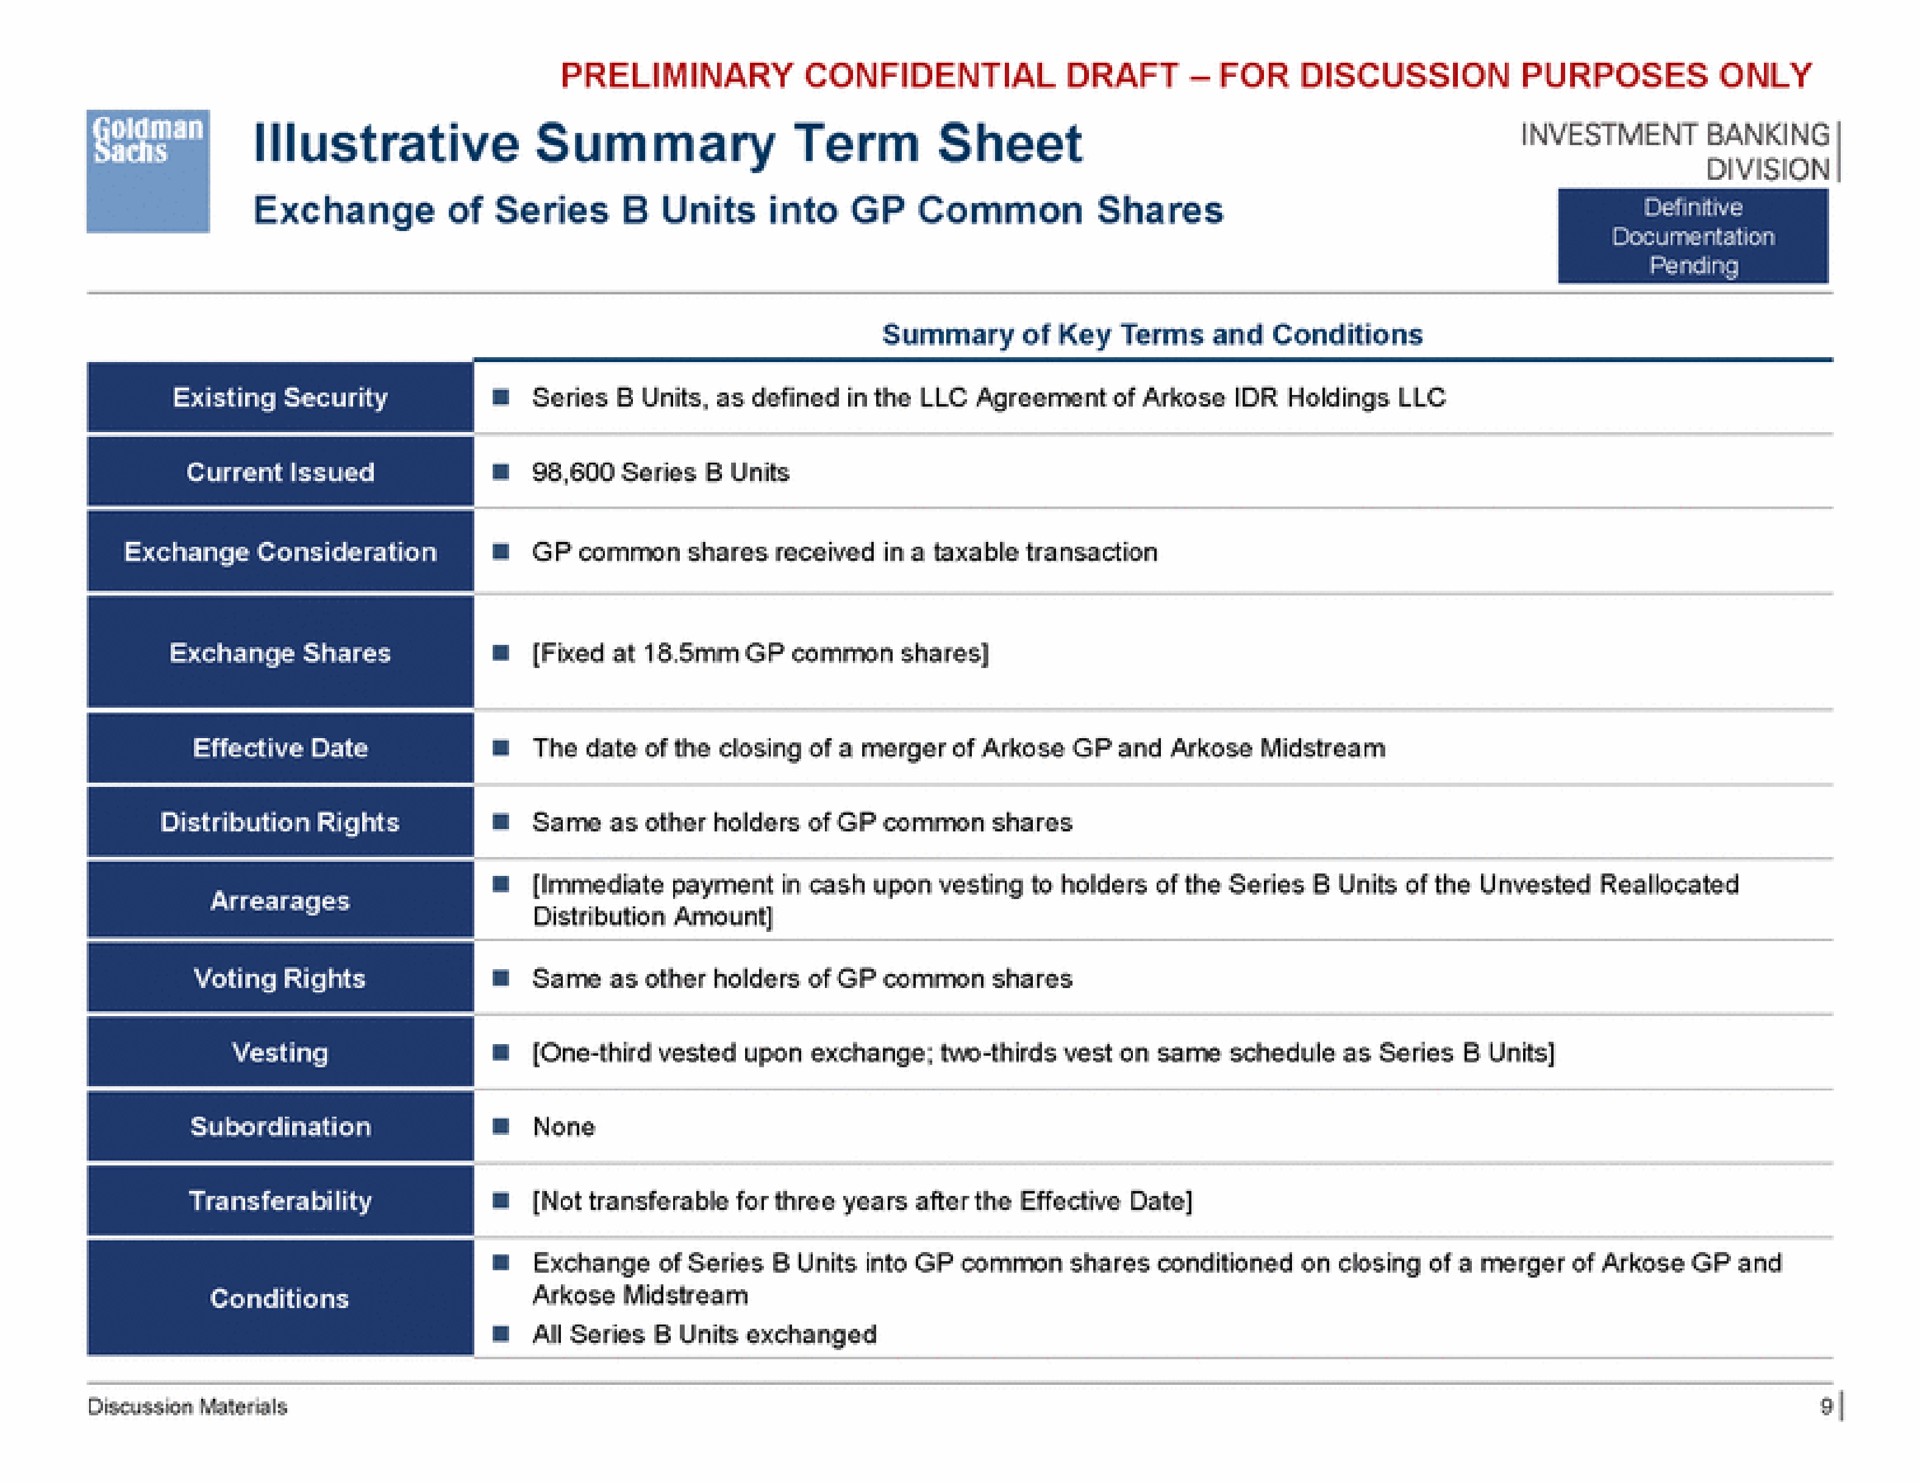 illustrative summary term sheet | Goldman Sachs